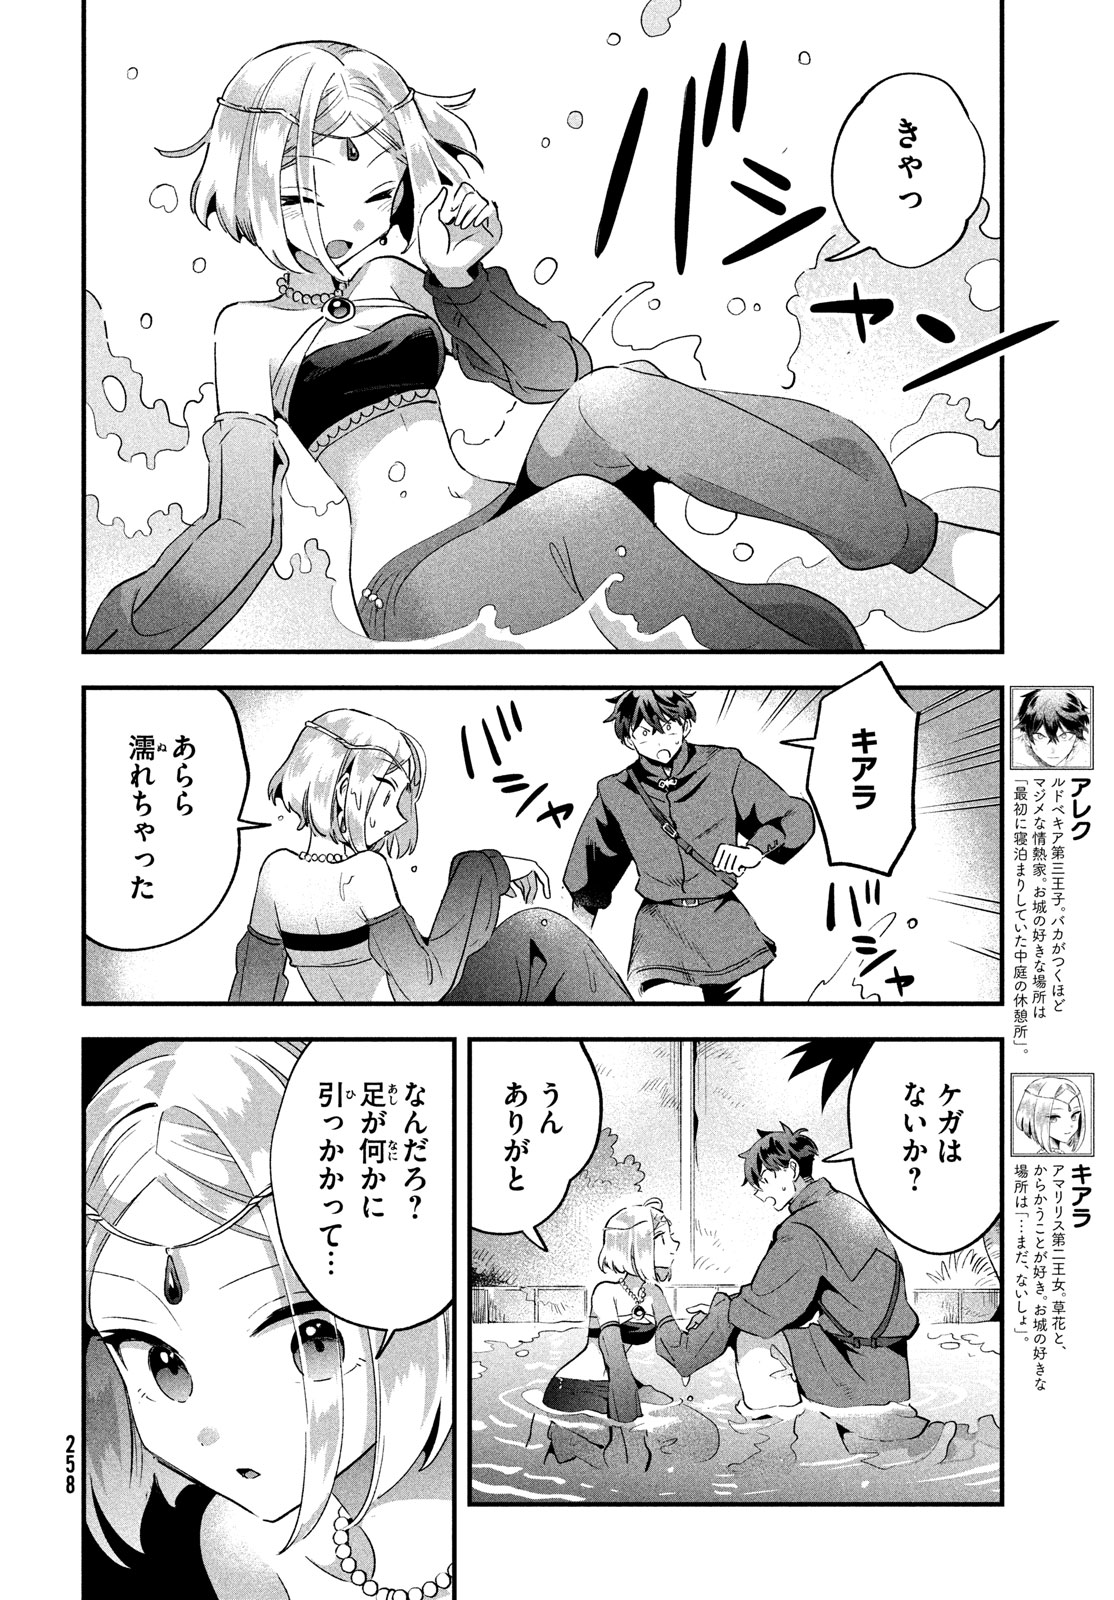 7-nin no Nemuri Hime - Chapter 36 - Page 2